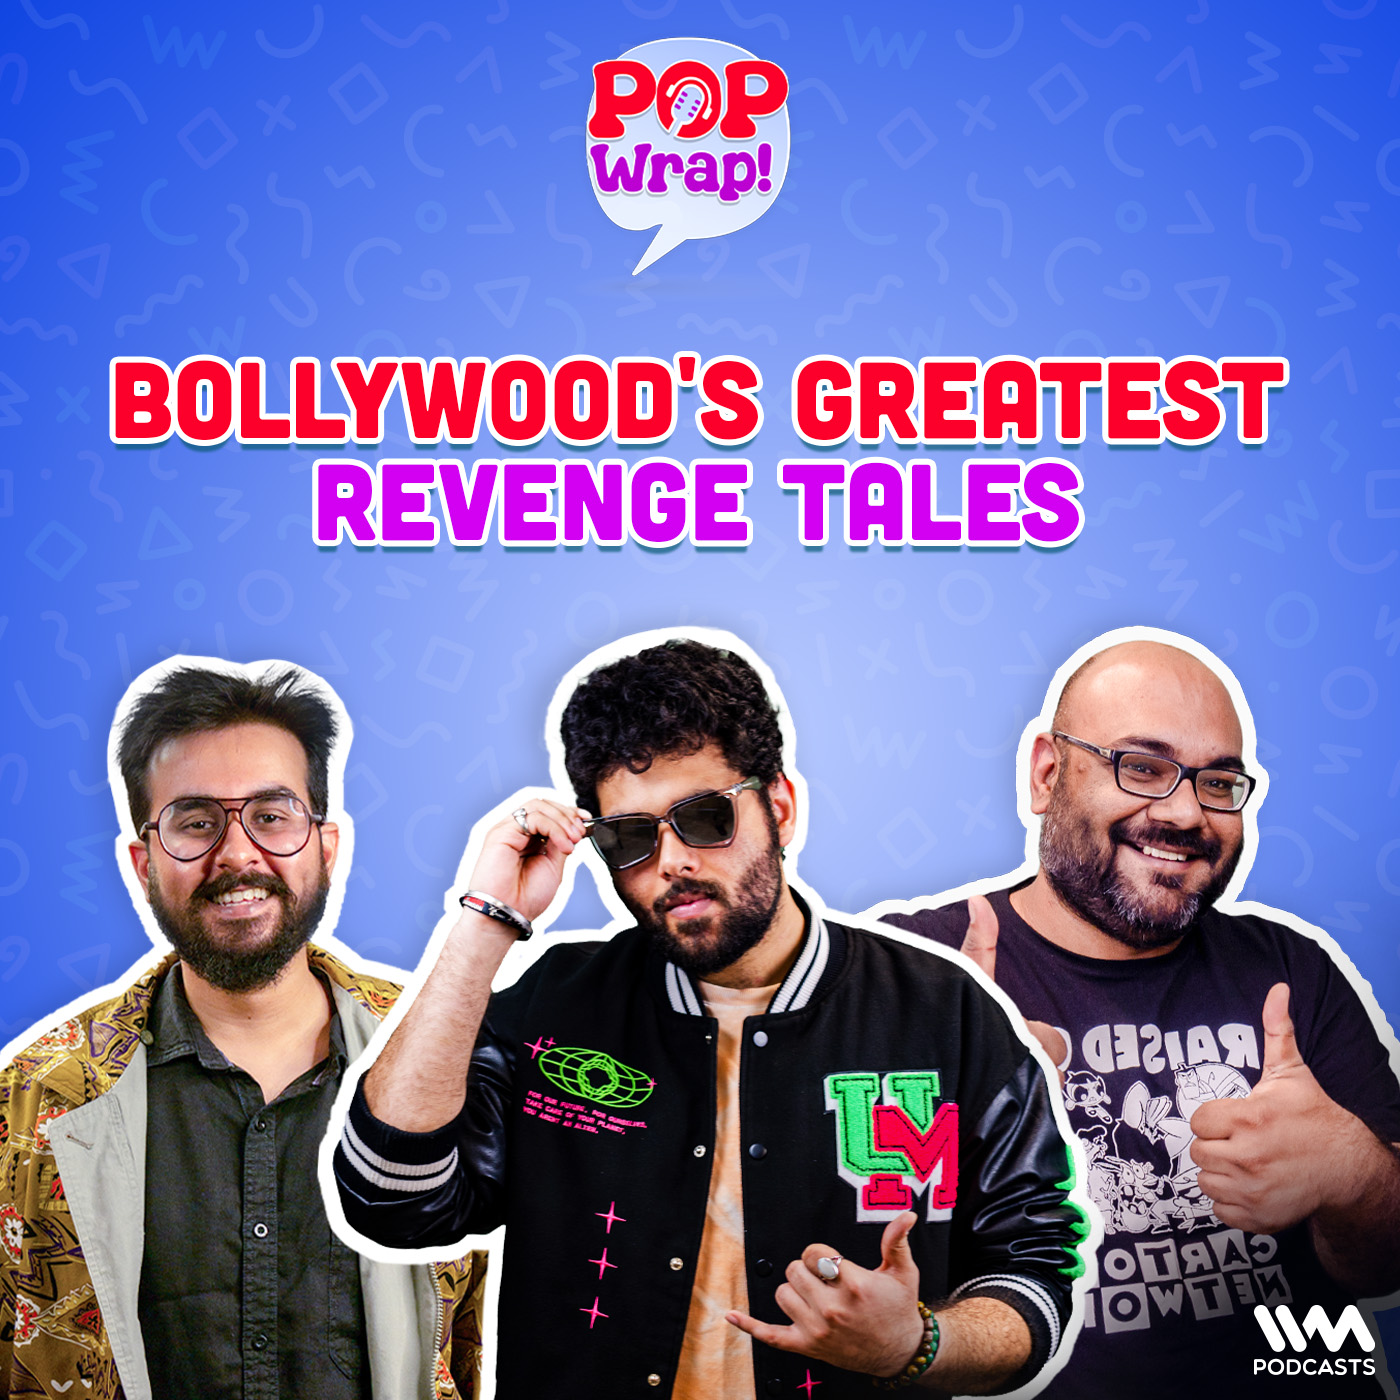 Bollywood's Greatest Revenge Tales | Pop Wrap!